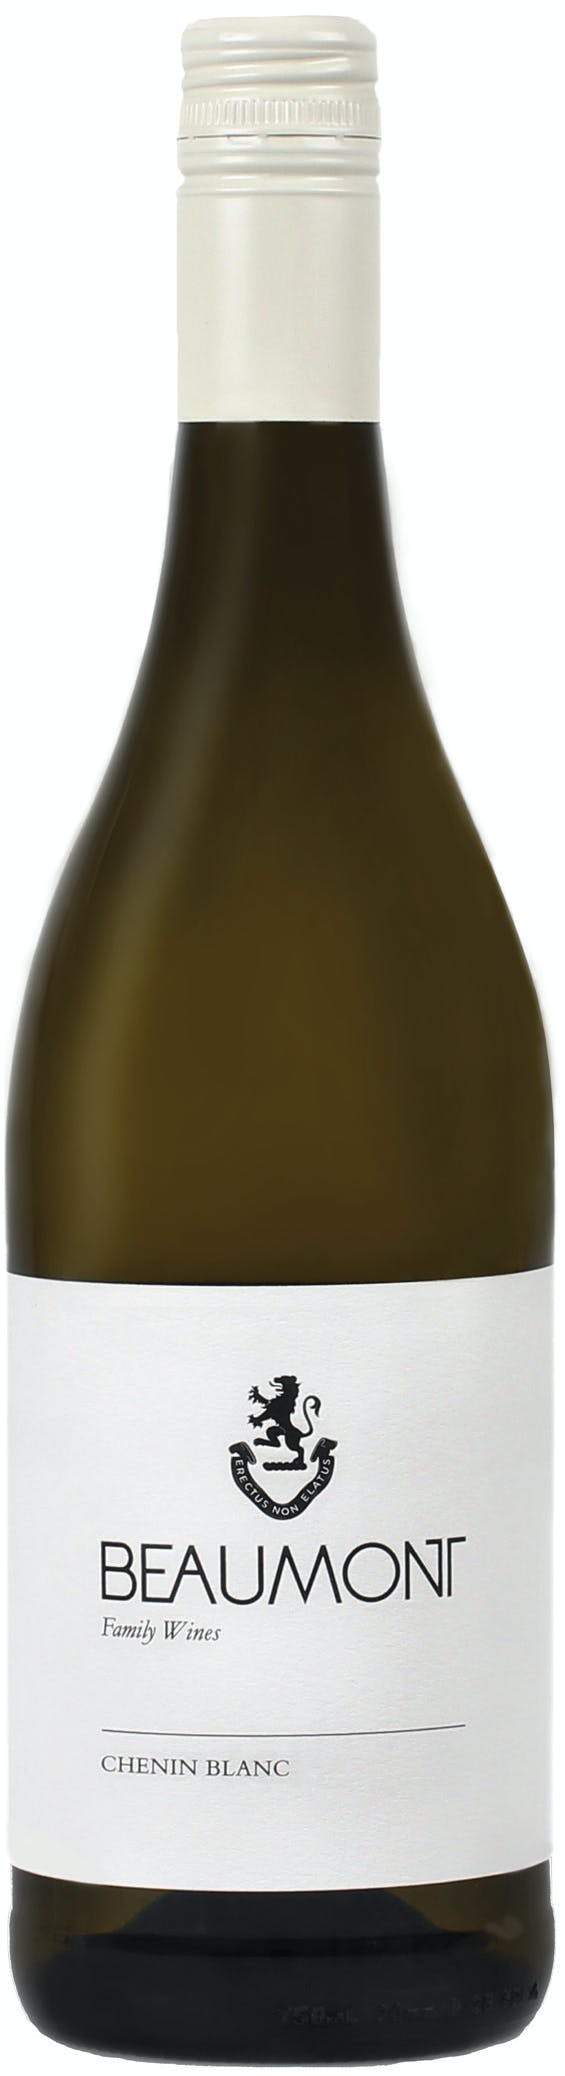 Beaumont Chenin Blanc 2020 (750ml)